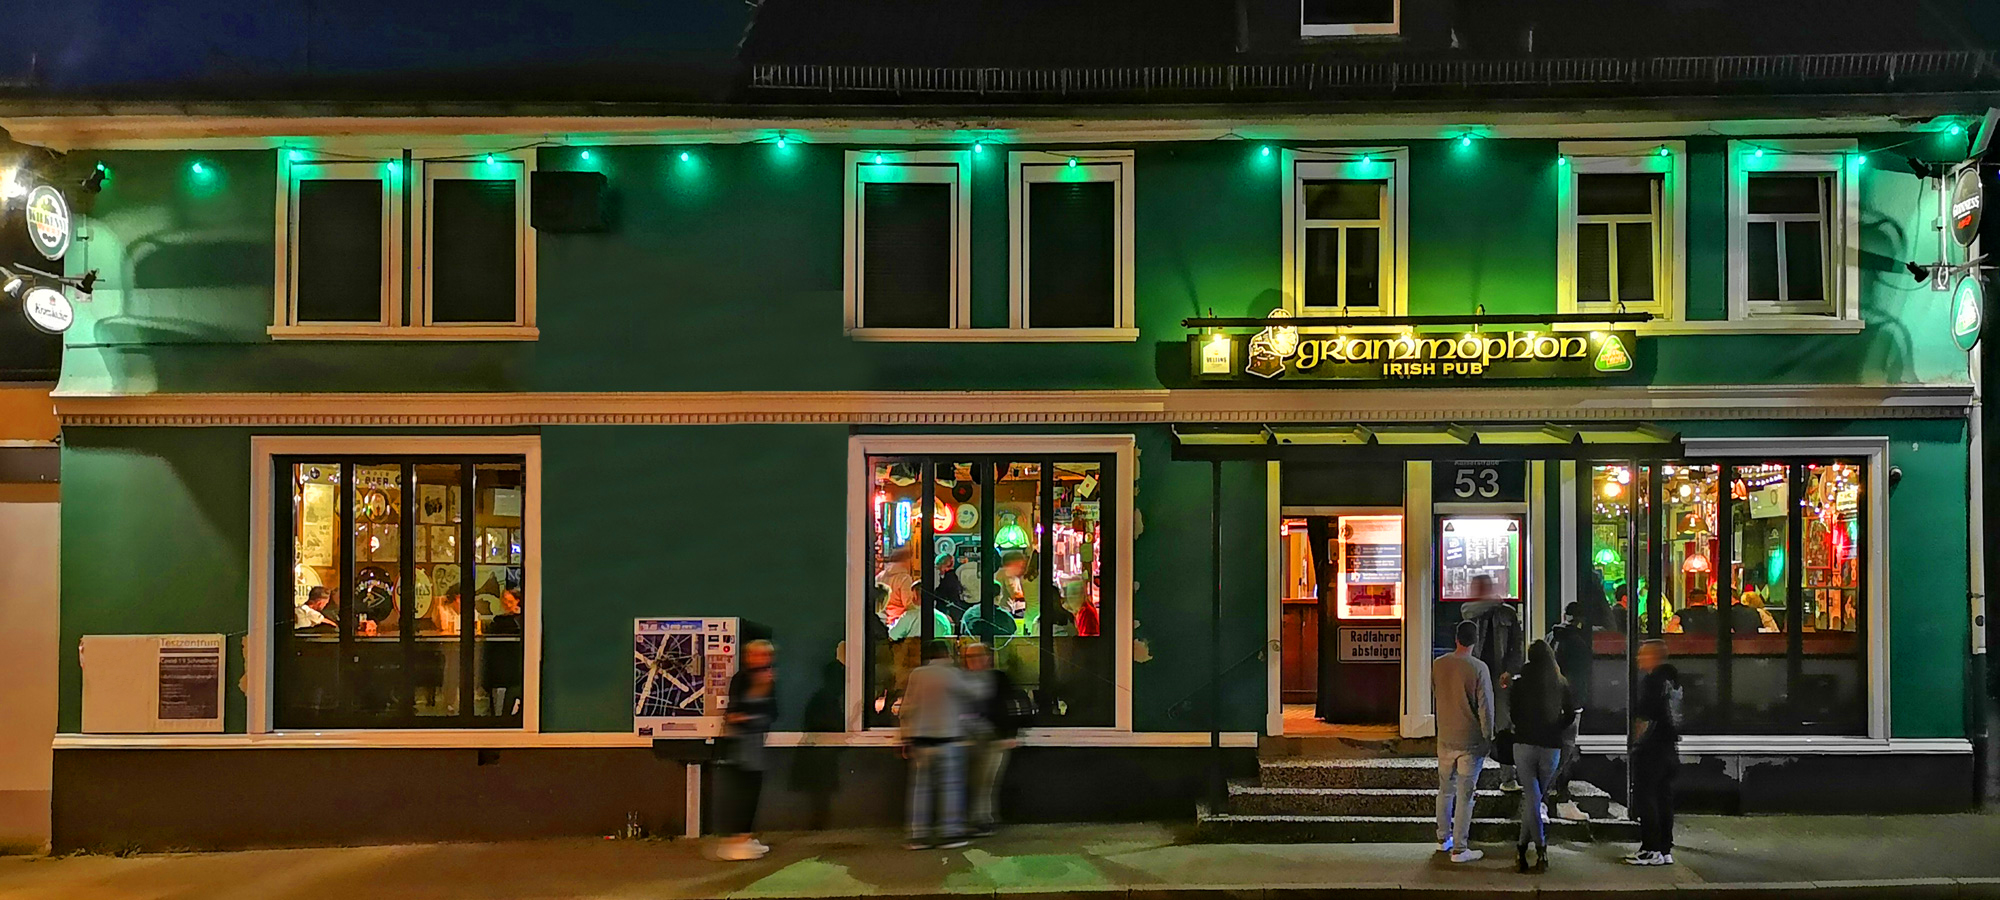 Grammophon Irish Pub